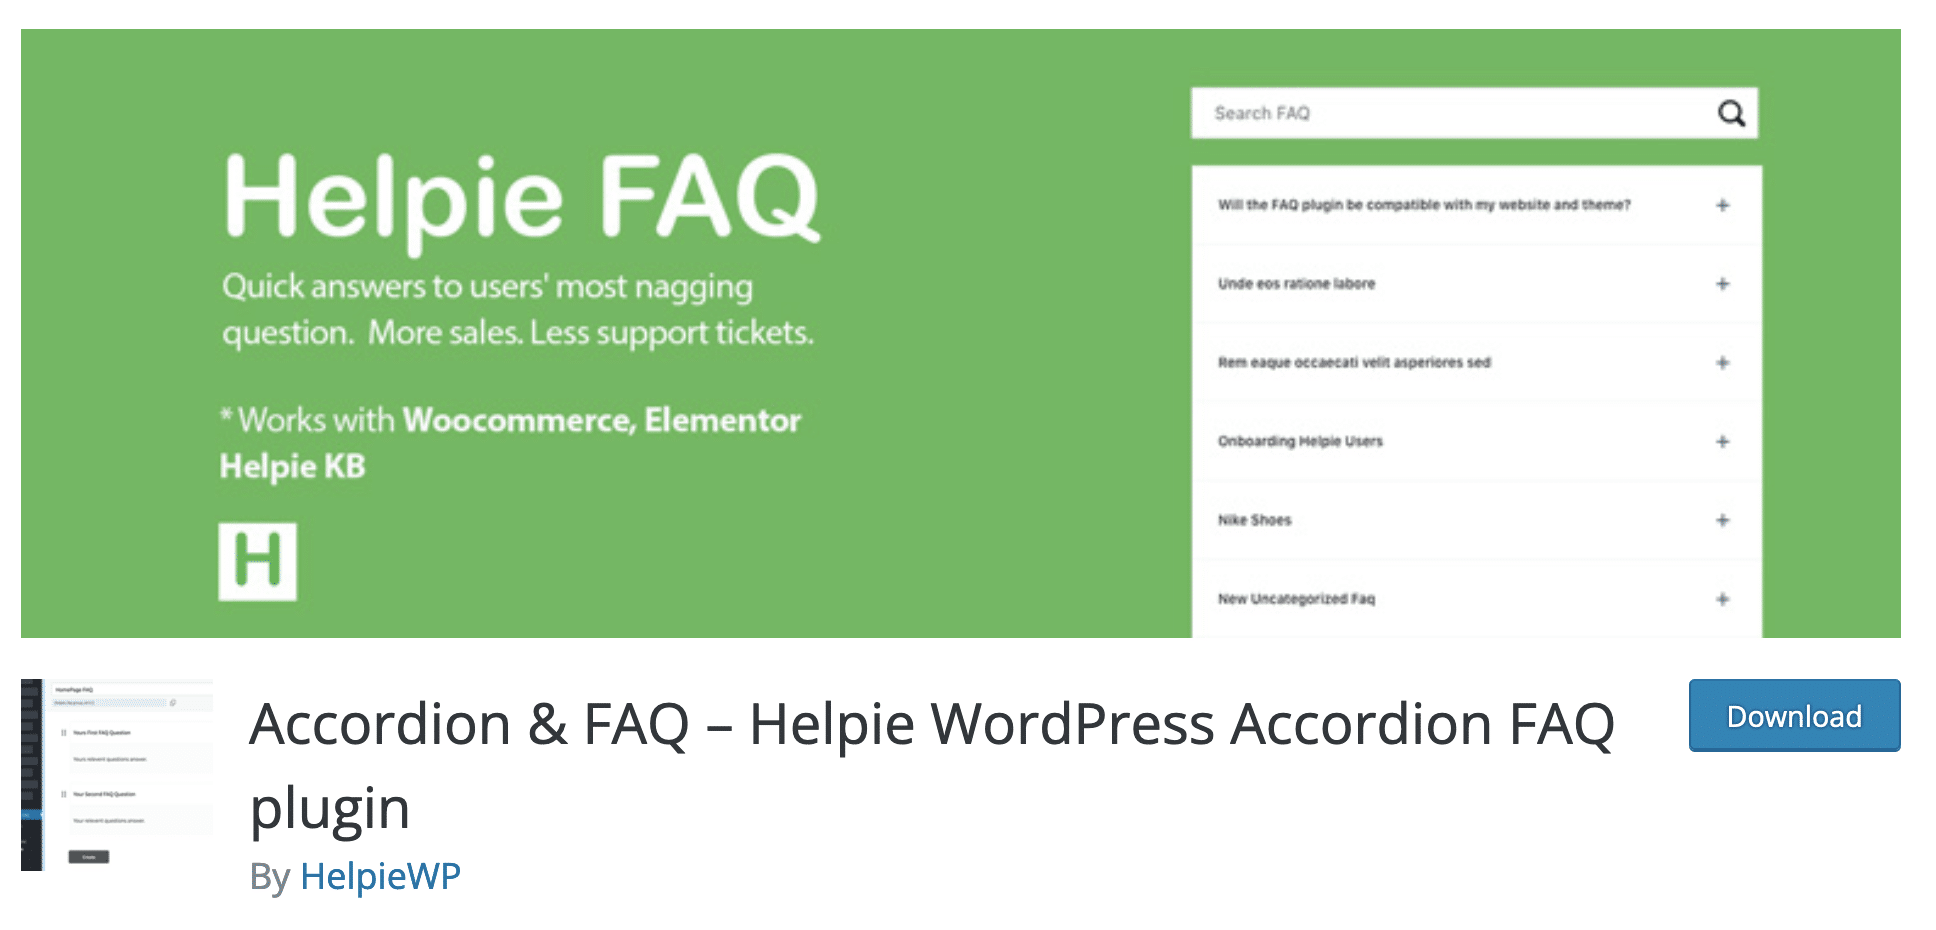 The Accordion & FAQ - Helpie WordPress Accordion FAQ plugin on WordPress.